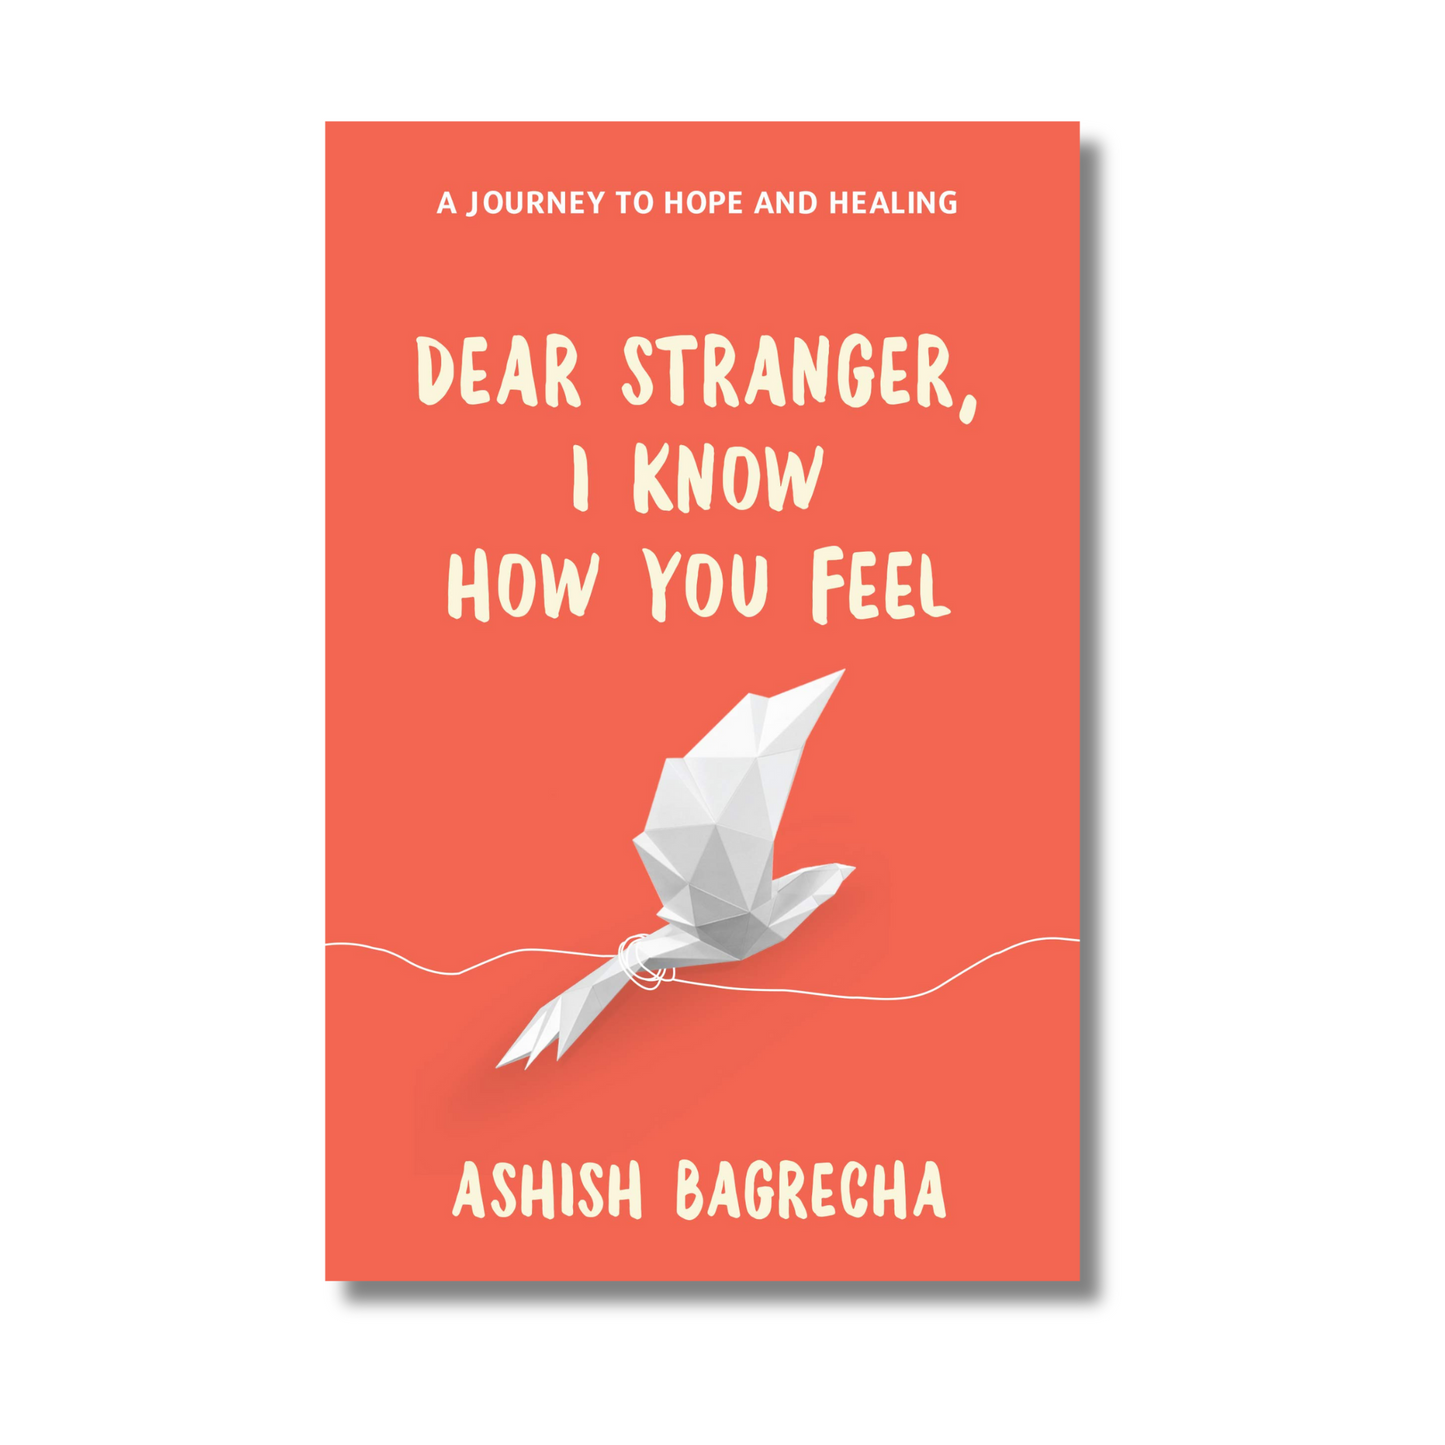 Dear Stranger, I Know How You Feel by Ashish Bagrecha (Paperback)